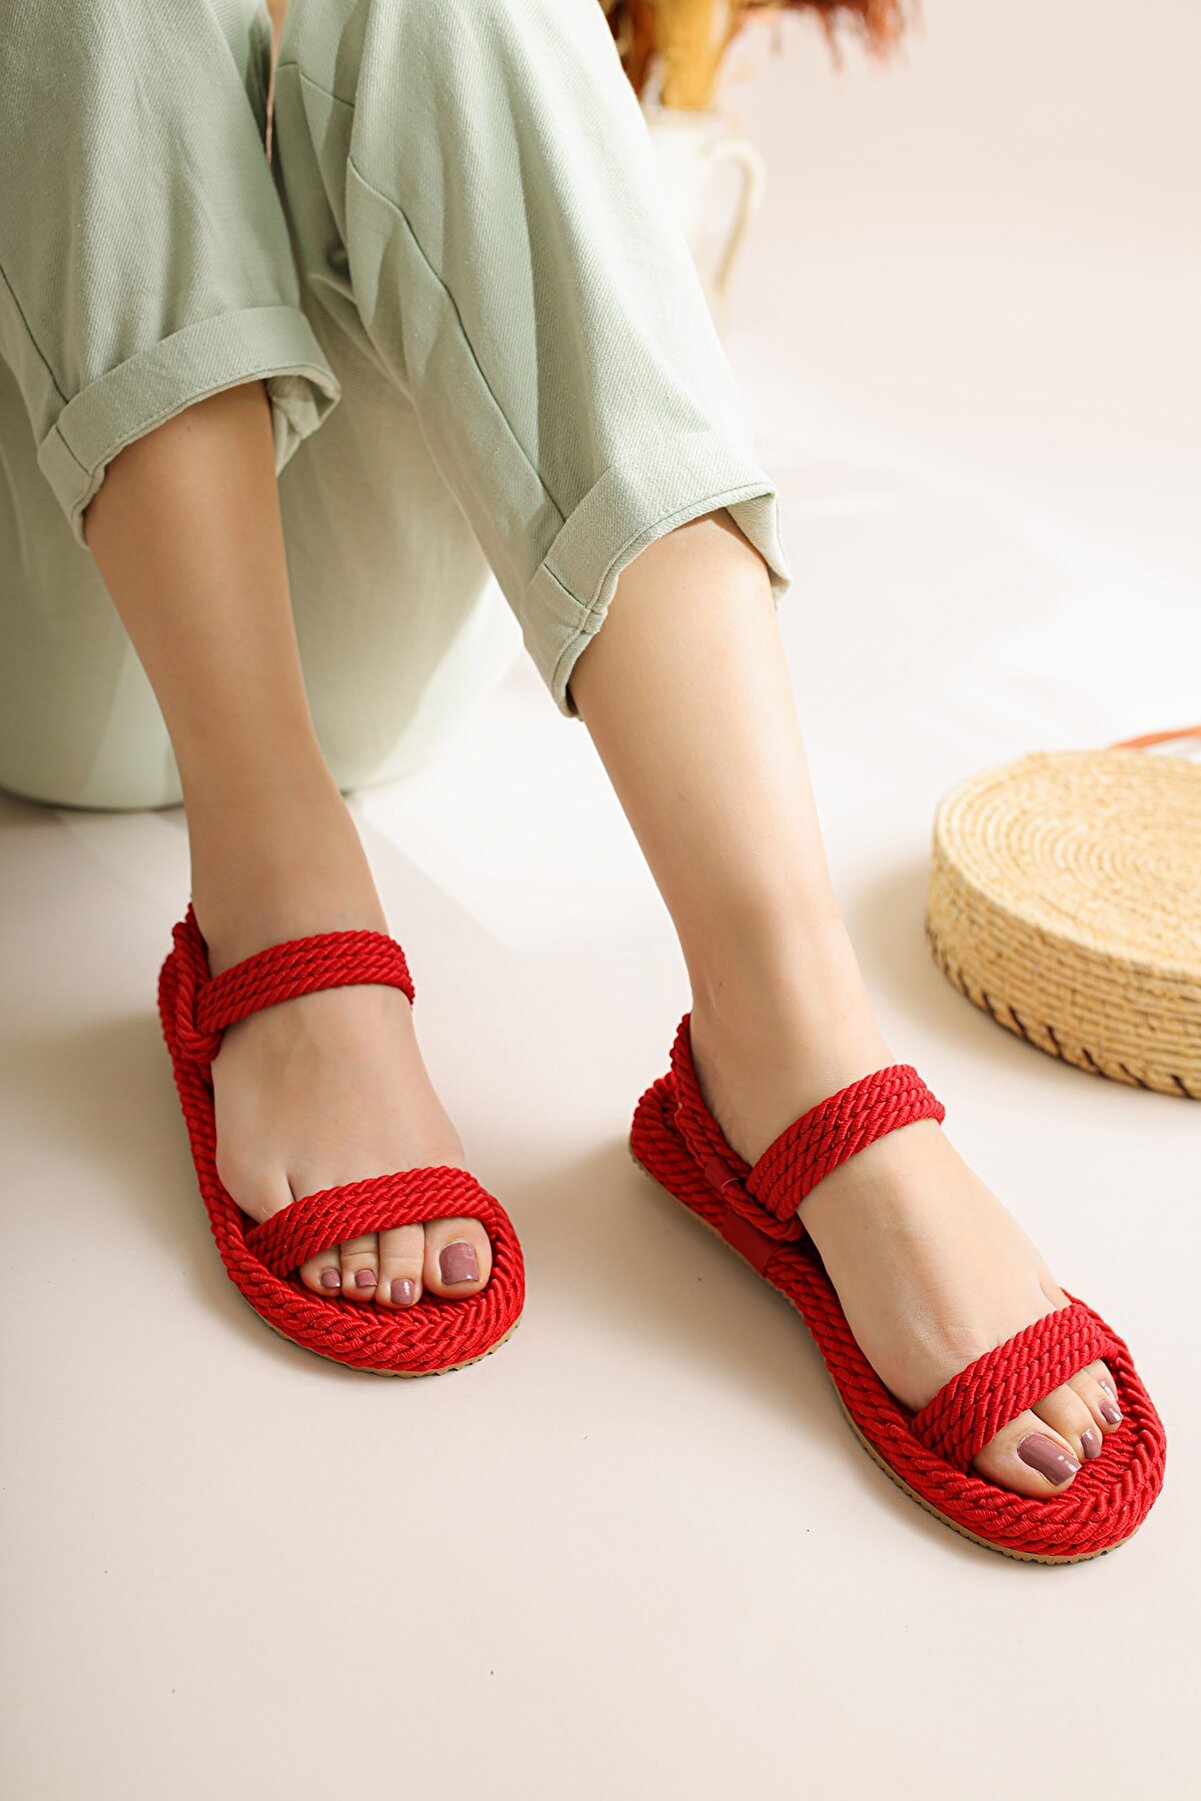 Limoya Jeannie Kırmızı Halat Sandalet Basic